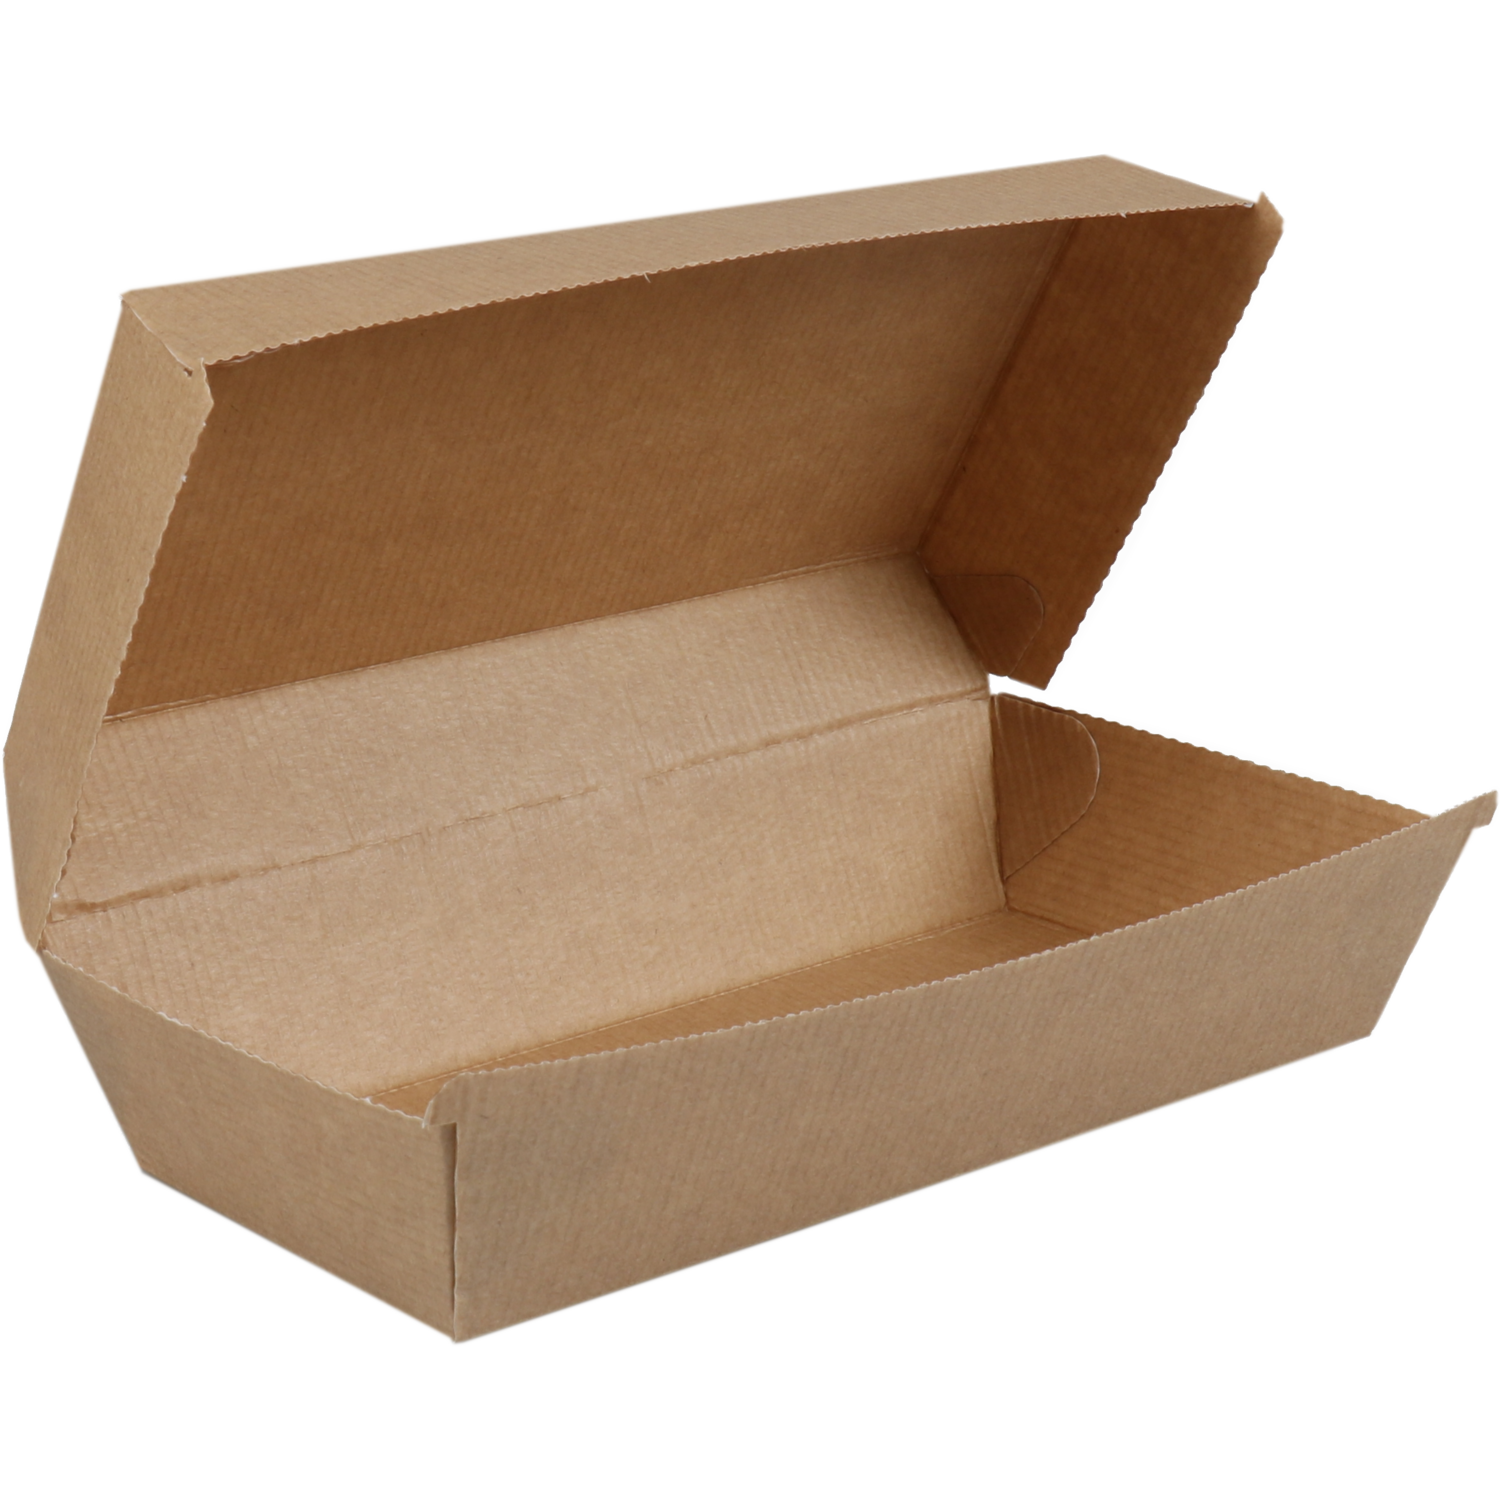 Biodore® Bak, Papier, sandwichbox, 185x85x38mm, bruin 2